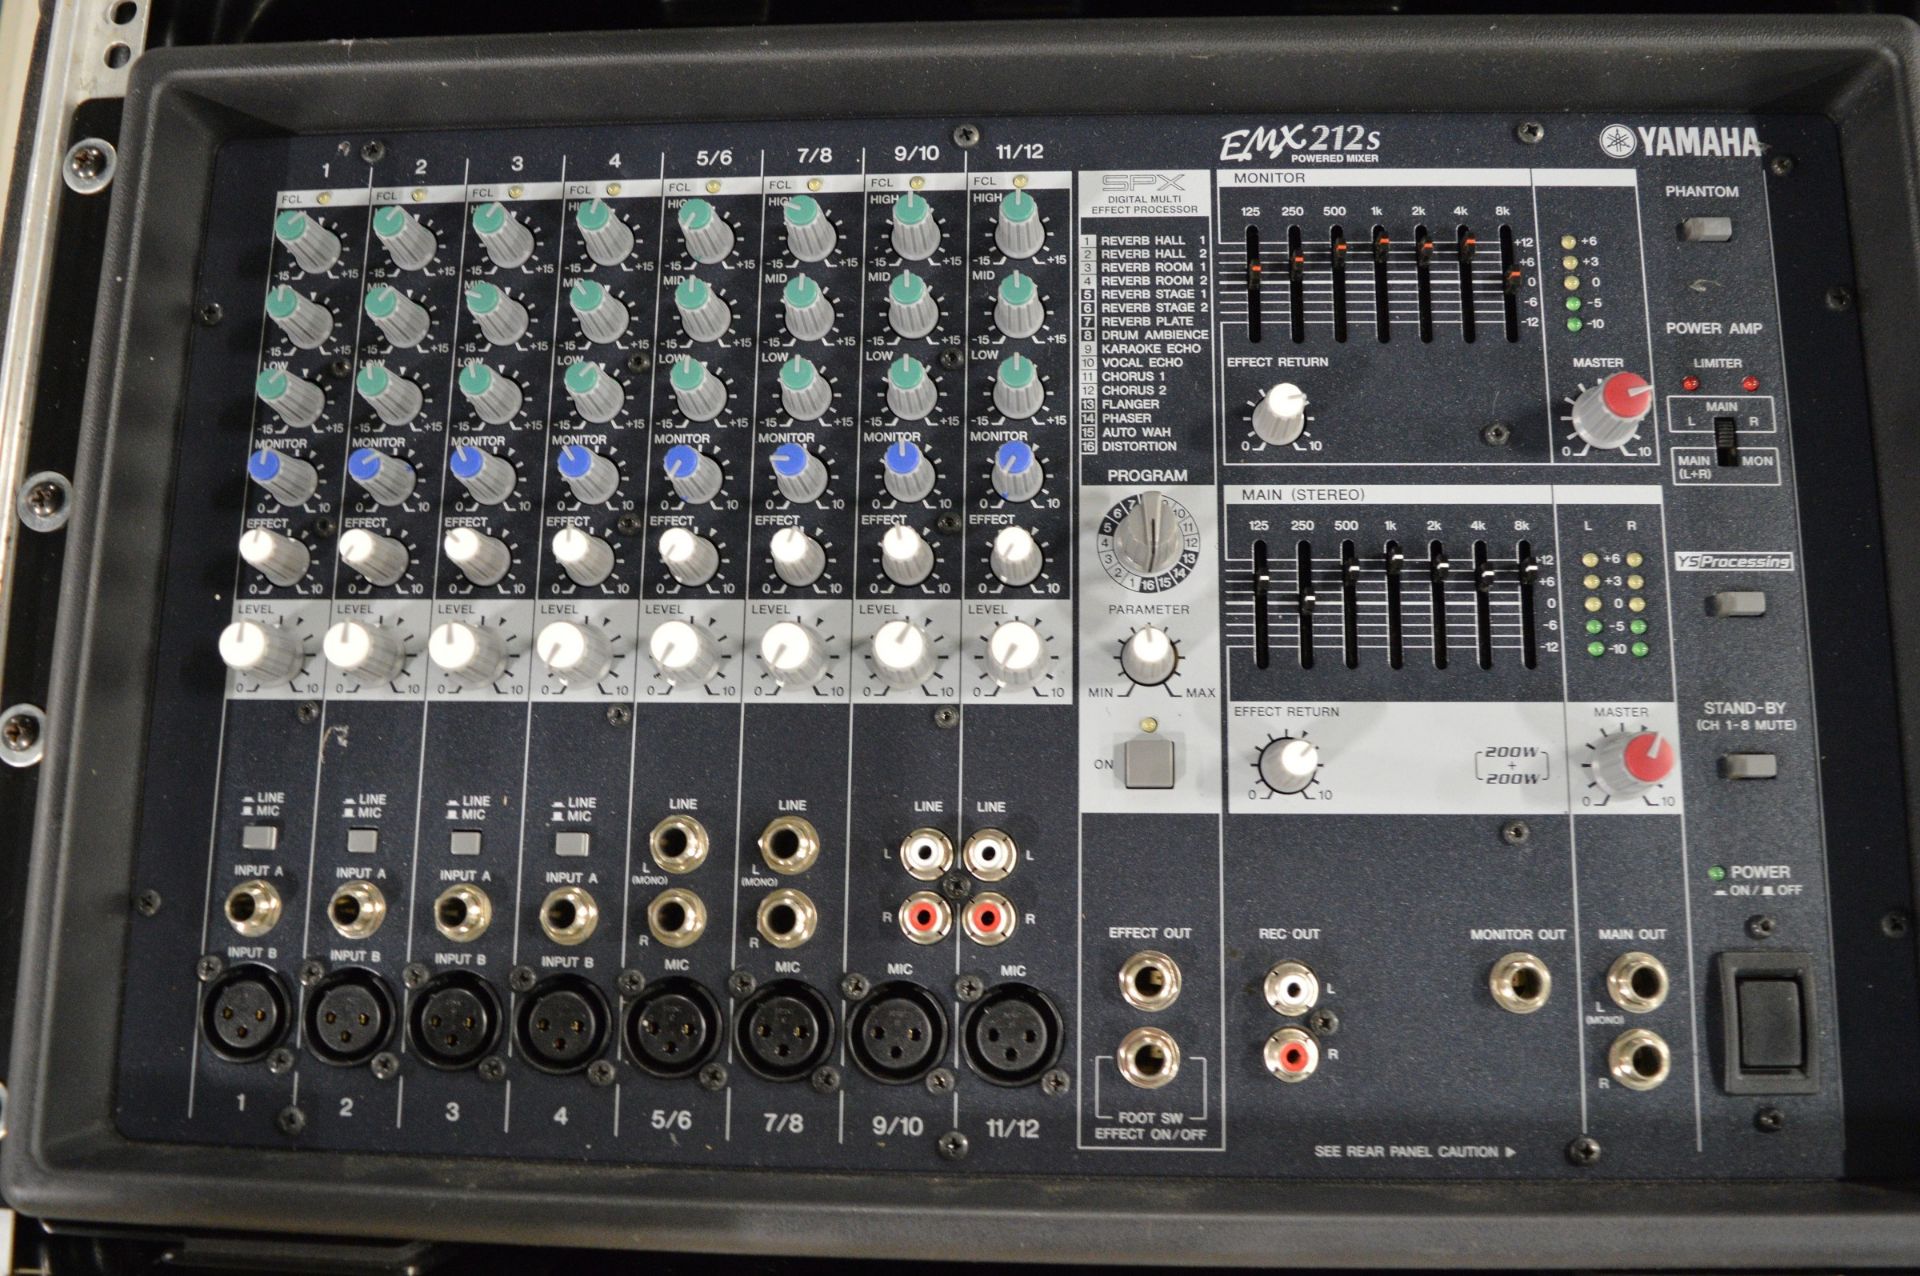 Yamaha EMX 212s Mixing panel in transit case - Image 2 of 3